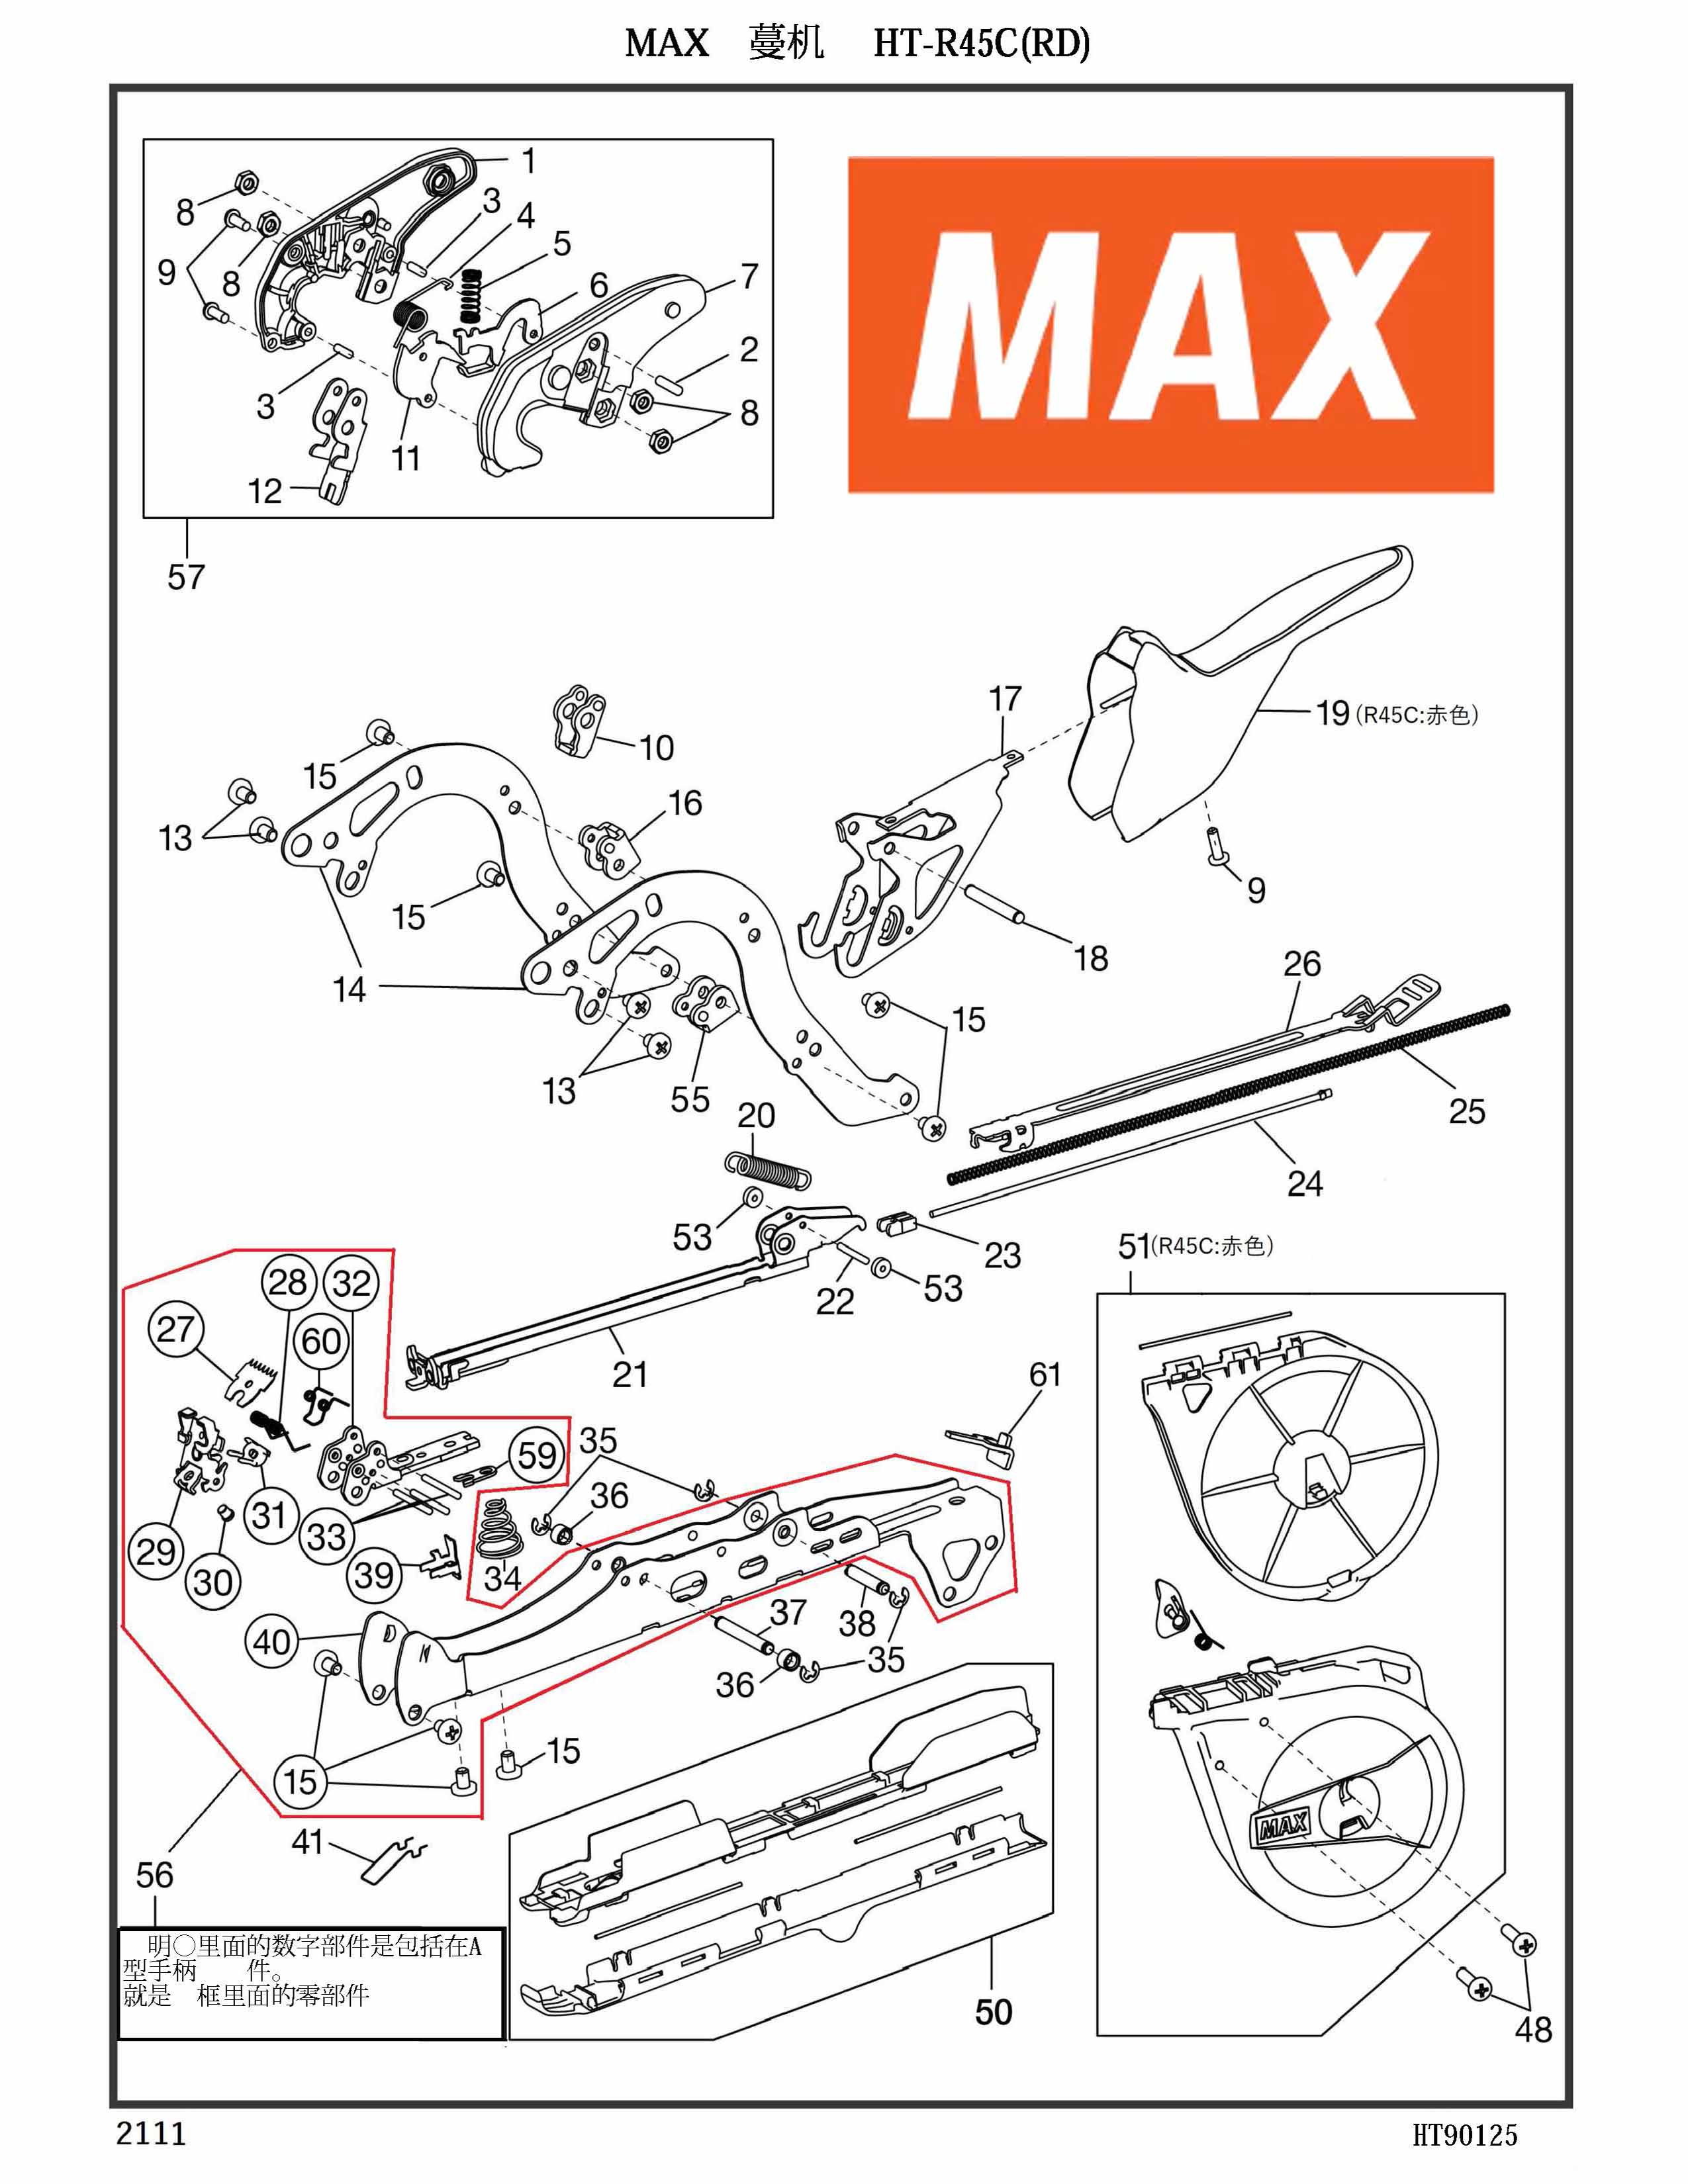 MAX Tapener Part CC43107 NAT M4(3) Fits MAX HT-R45L(O) R45C(RD) HT-R1 HT-R2 #8